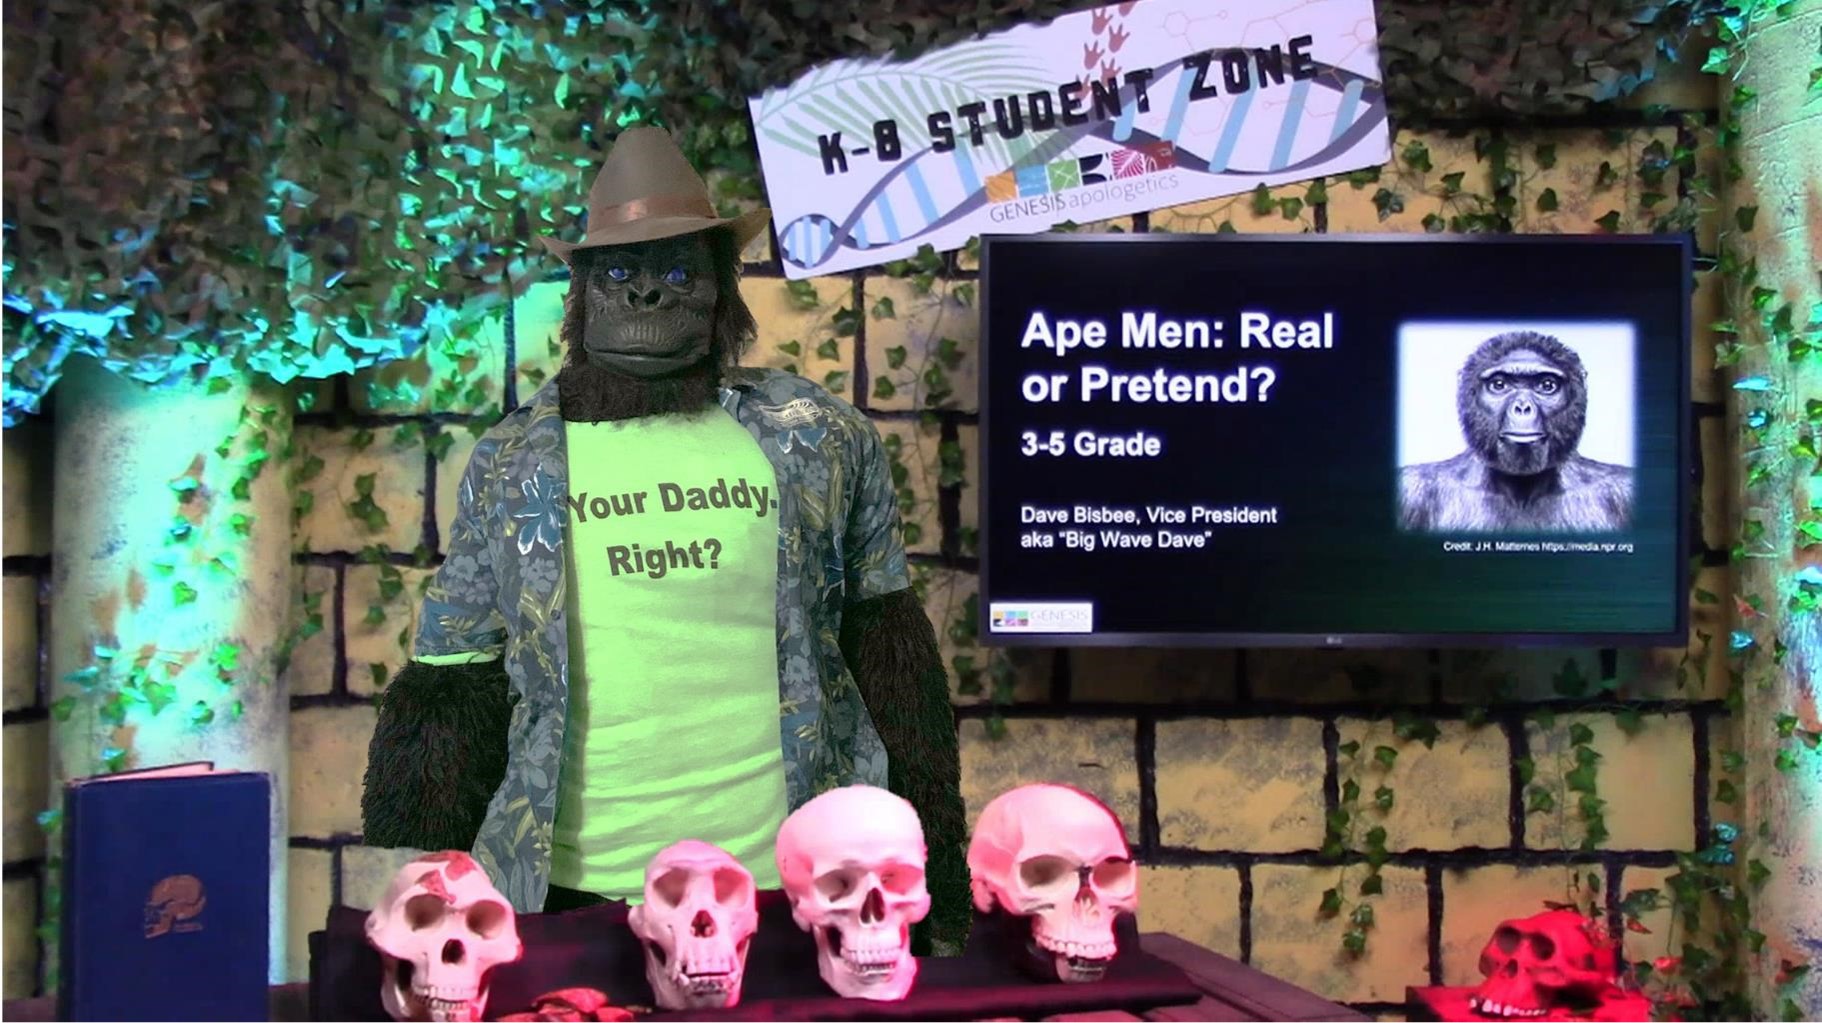 Ape Men: Real or Pretend